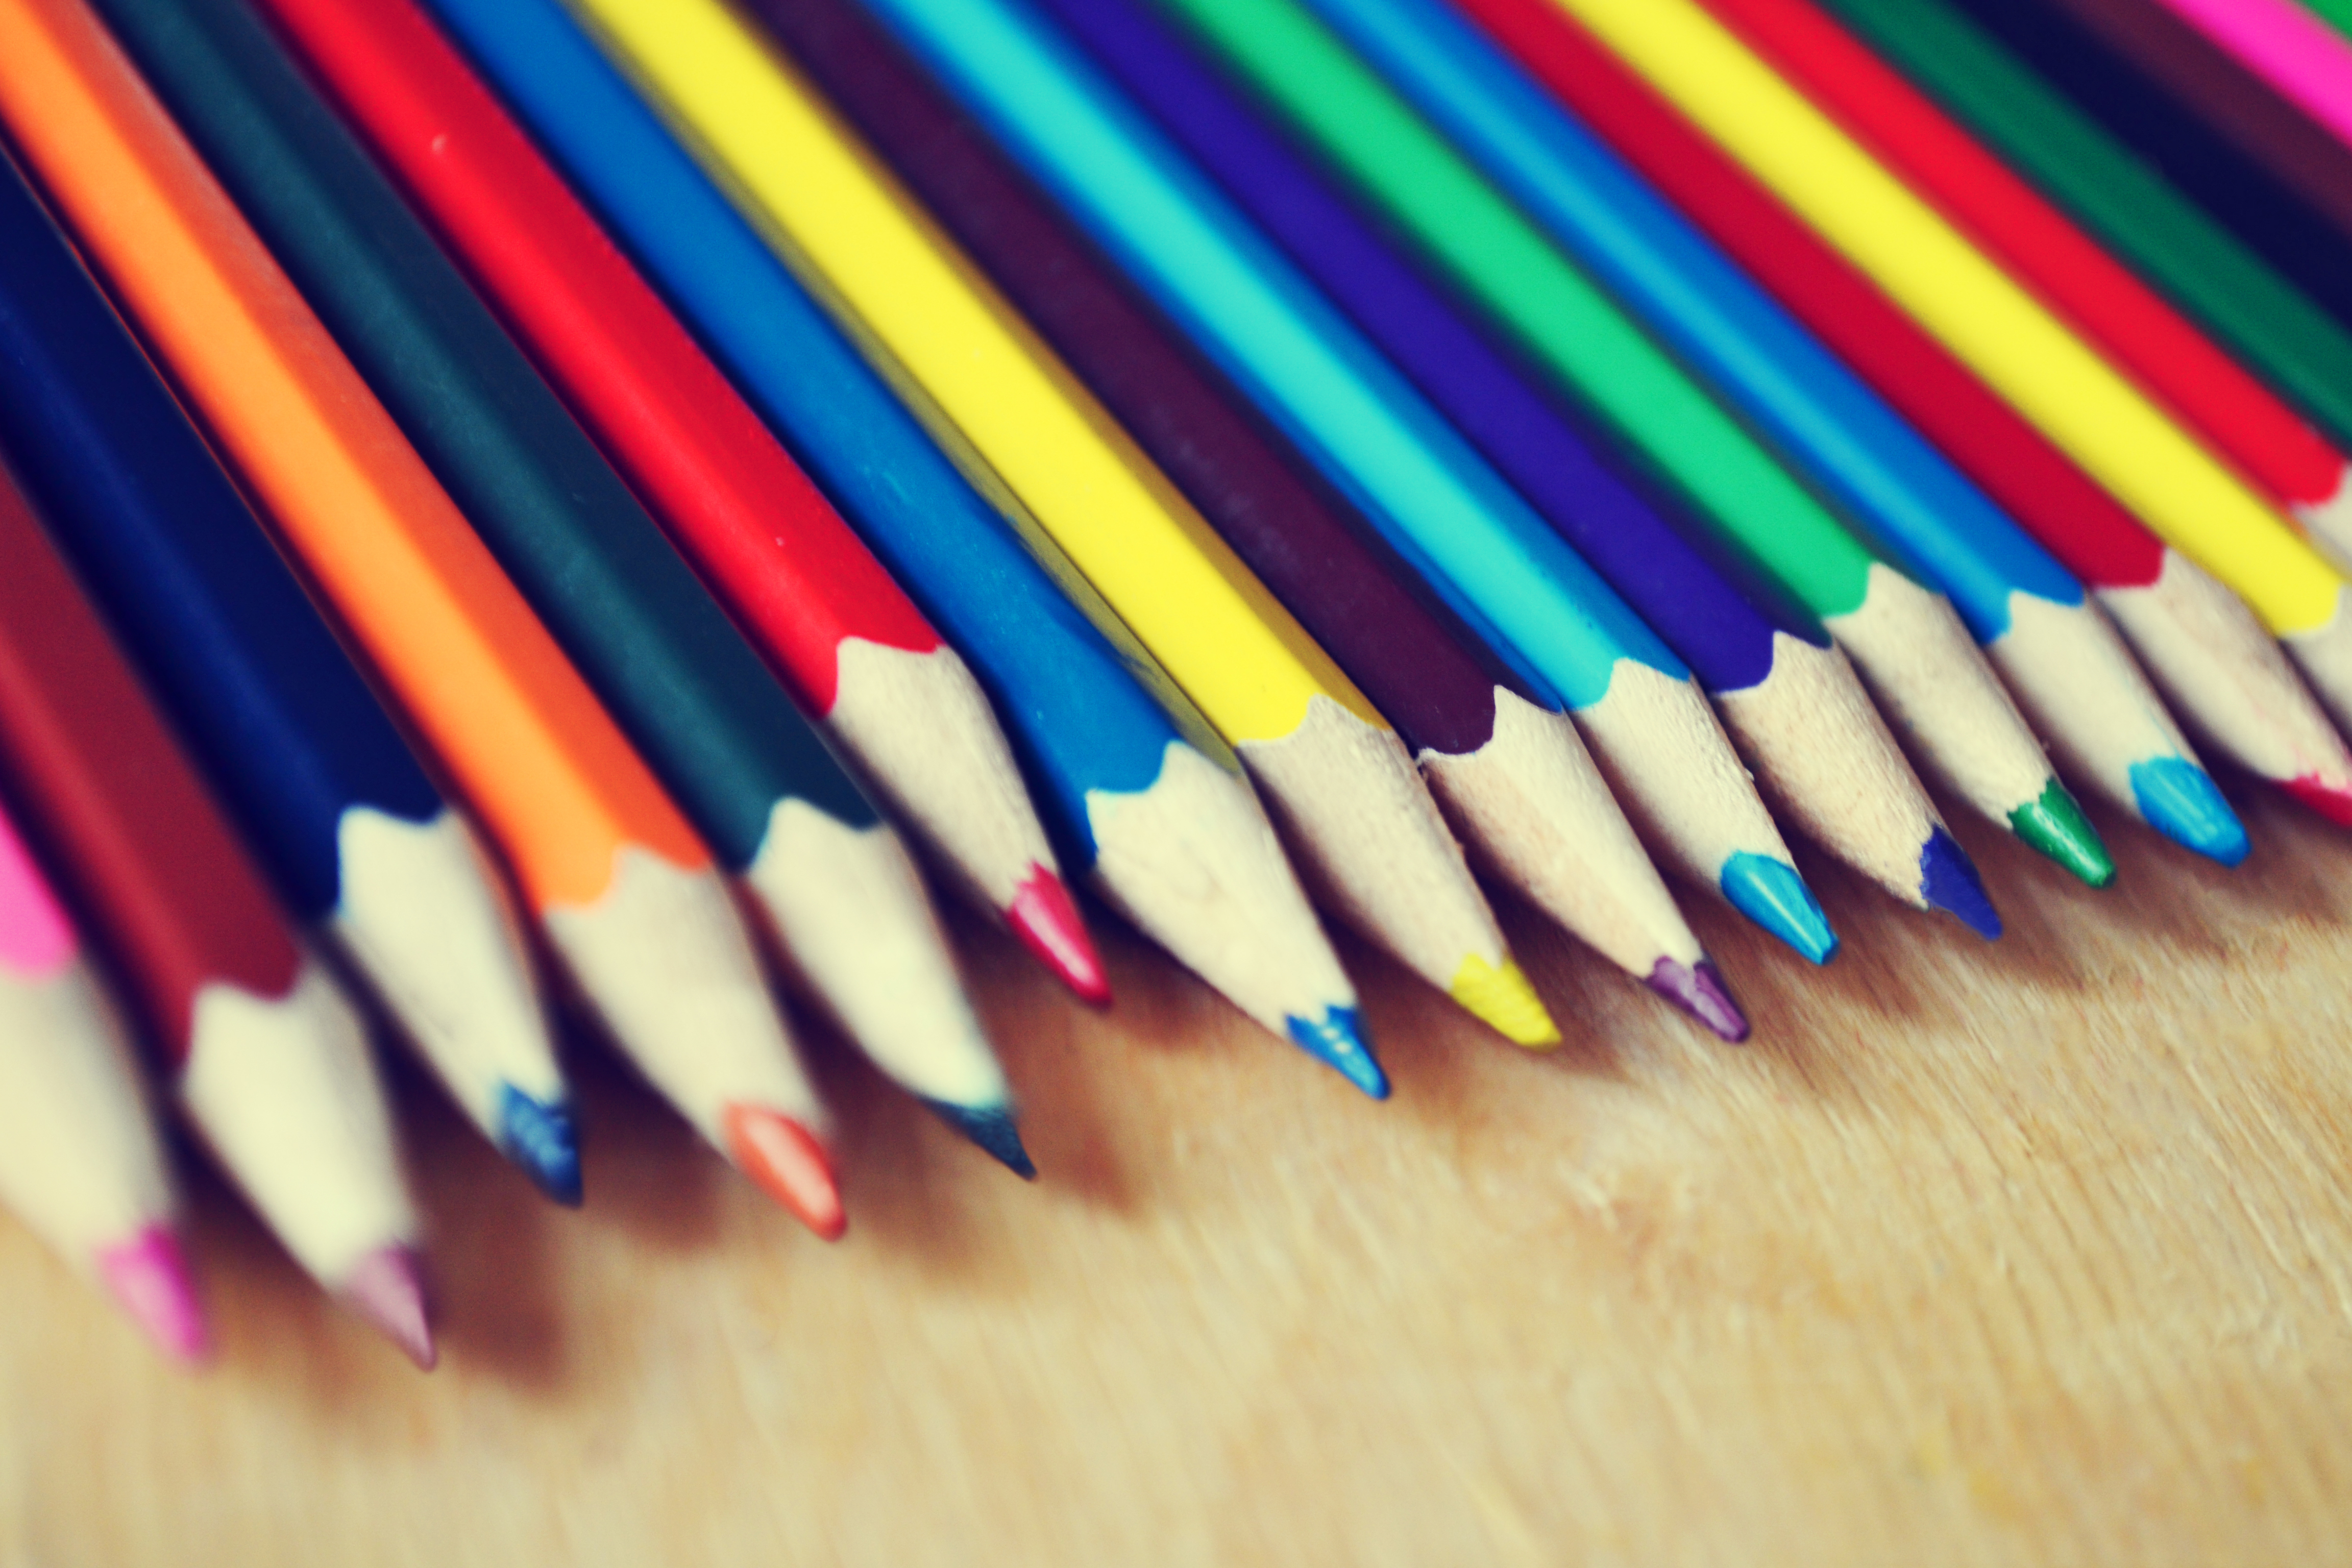 Изображения карандашей. Карандаши цветные. Карандаш фото. Цветные карандаши на столе. Много цветных карандашей.